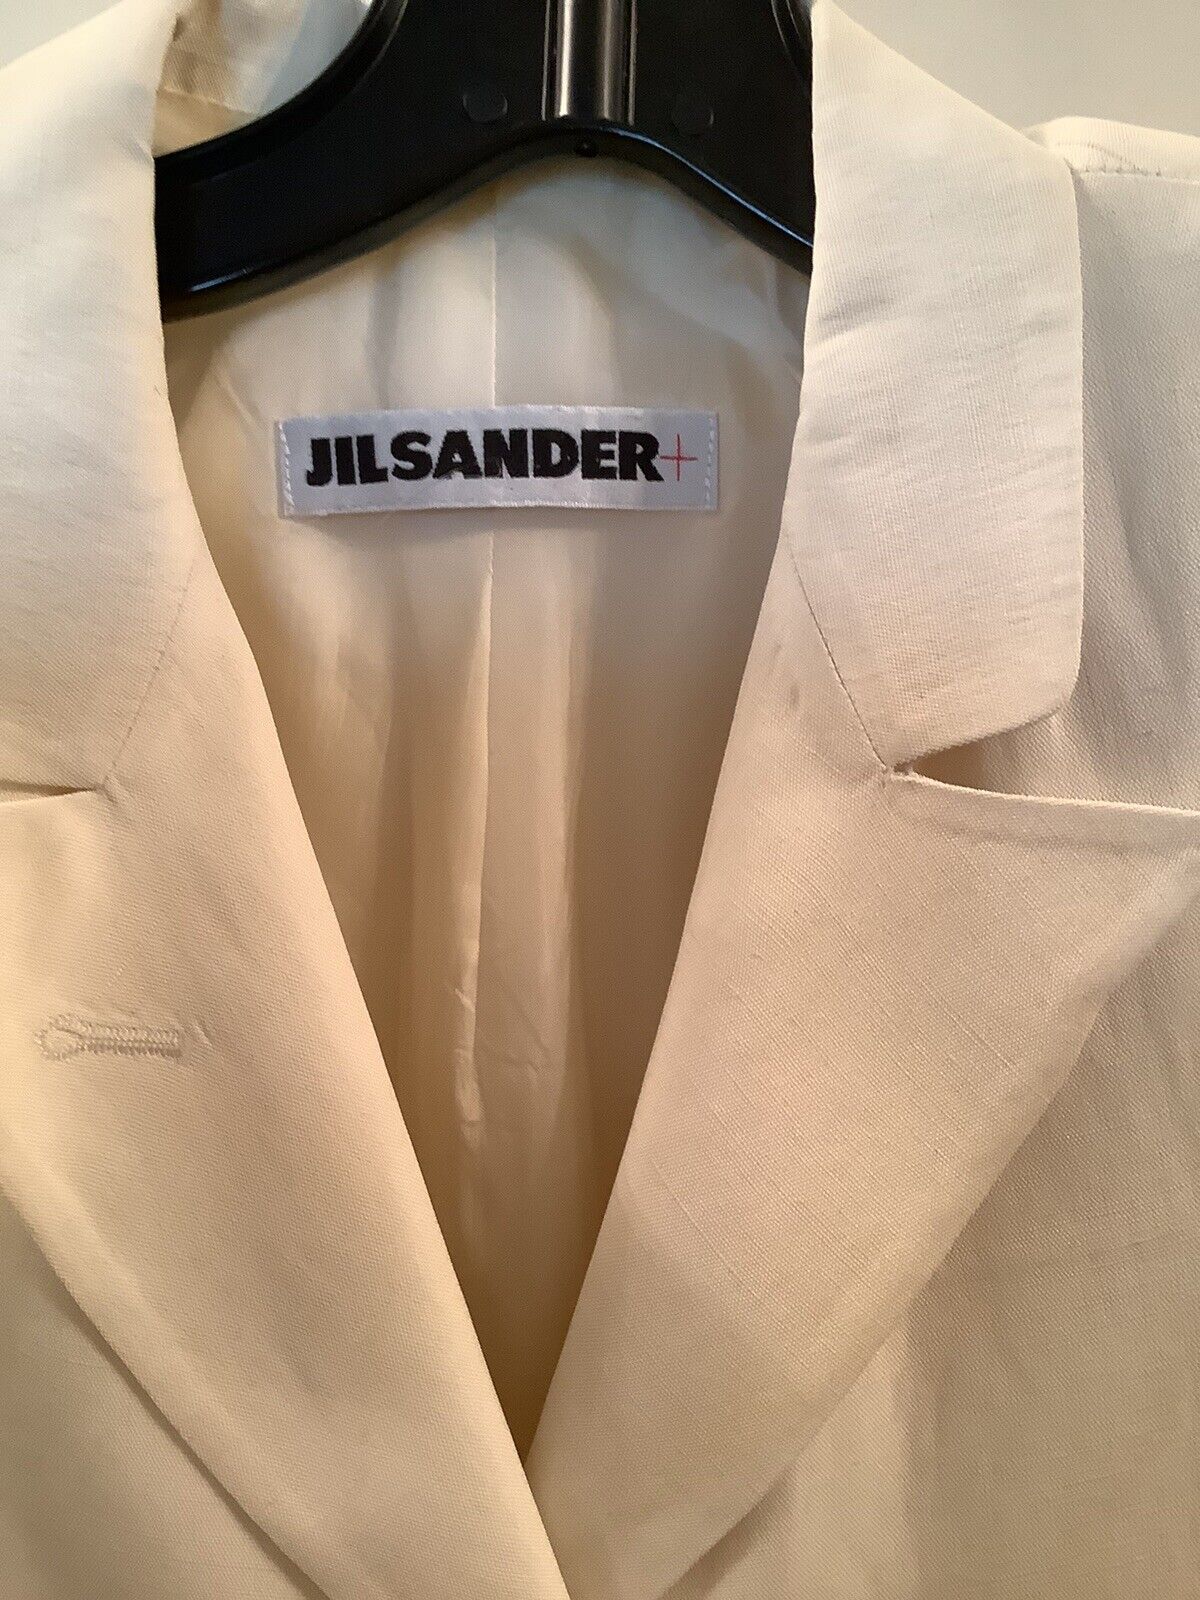 Jil Sander Cream Blazer, size 42, Made in Italy